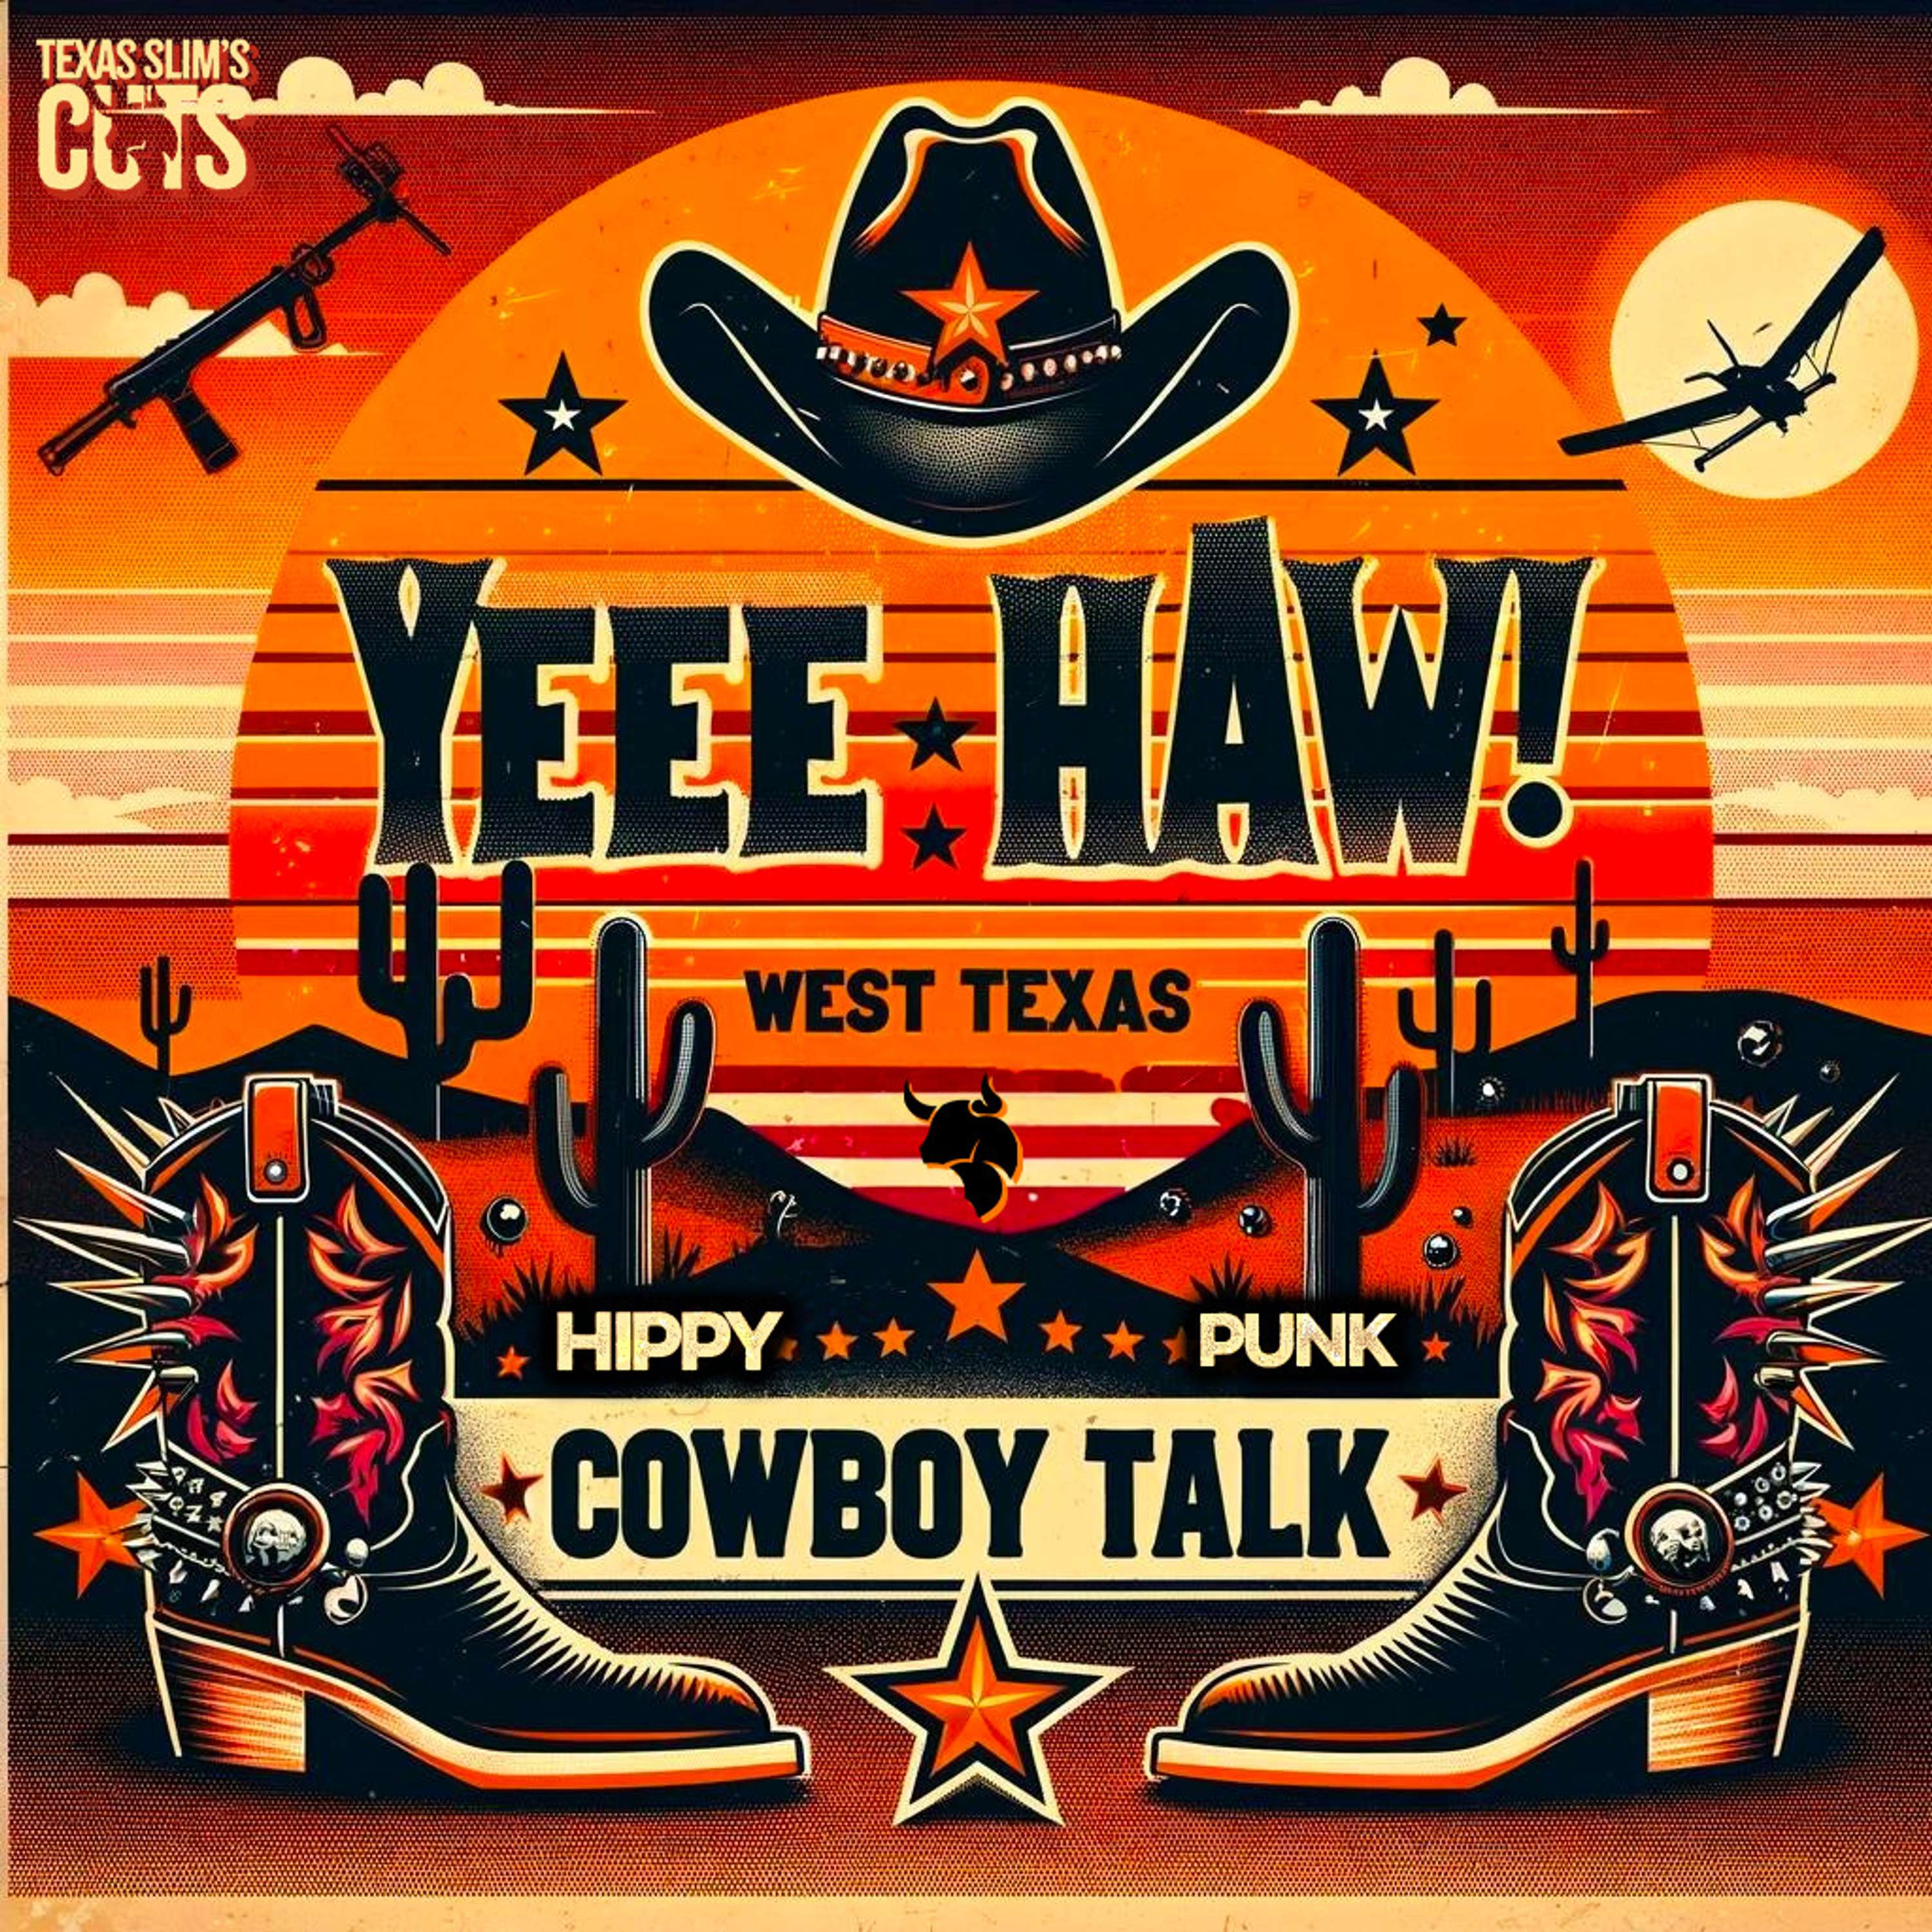 Yeehaw! Cowbow Talk with Texas Slim